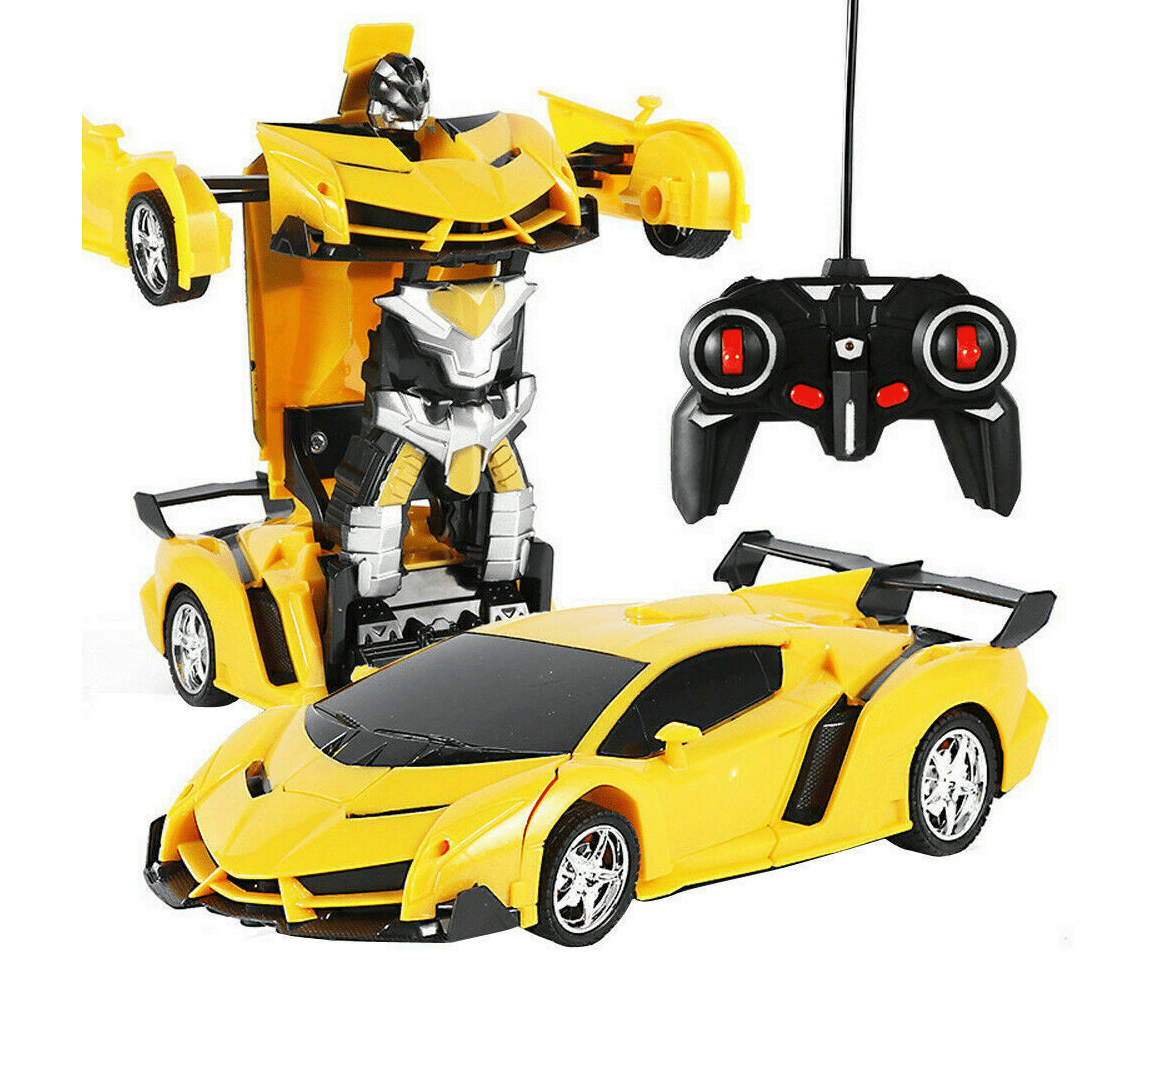 1:18 Transformer RC Robot Car Remote Control 2 IN 1 Kids Boys Car Model Toy Gift 